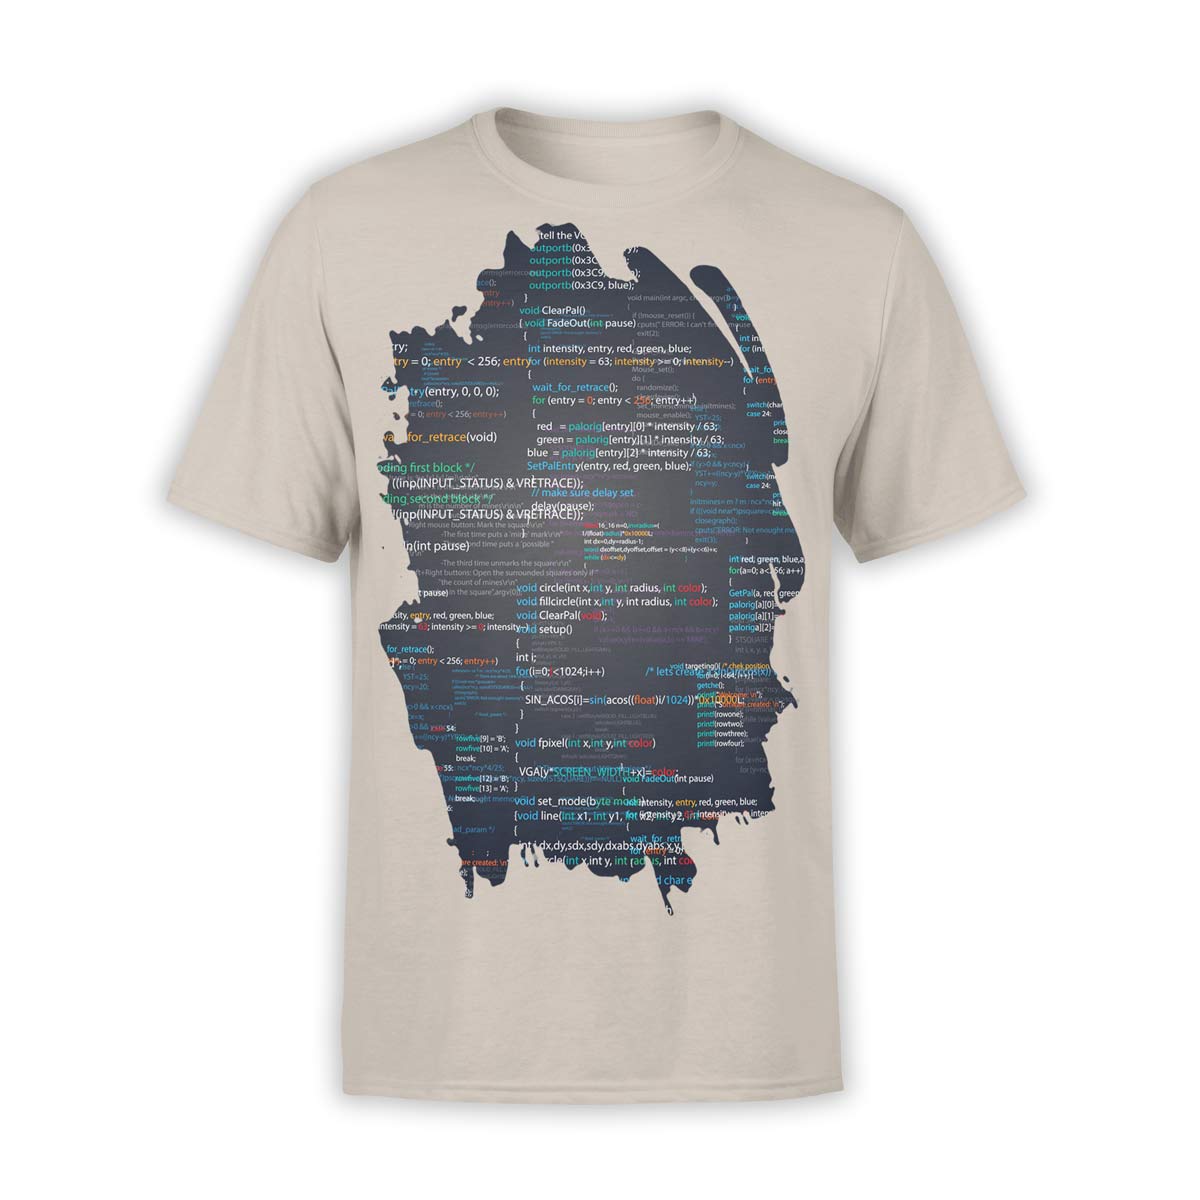 Programmer T-Shirts. "I Love Unisex Shirts. 100%